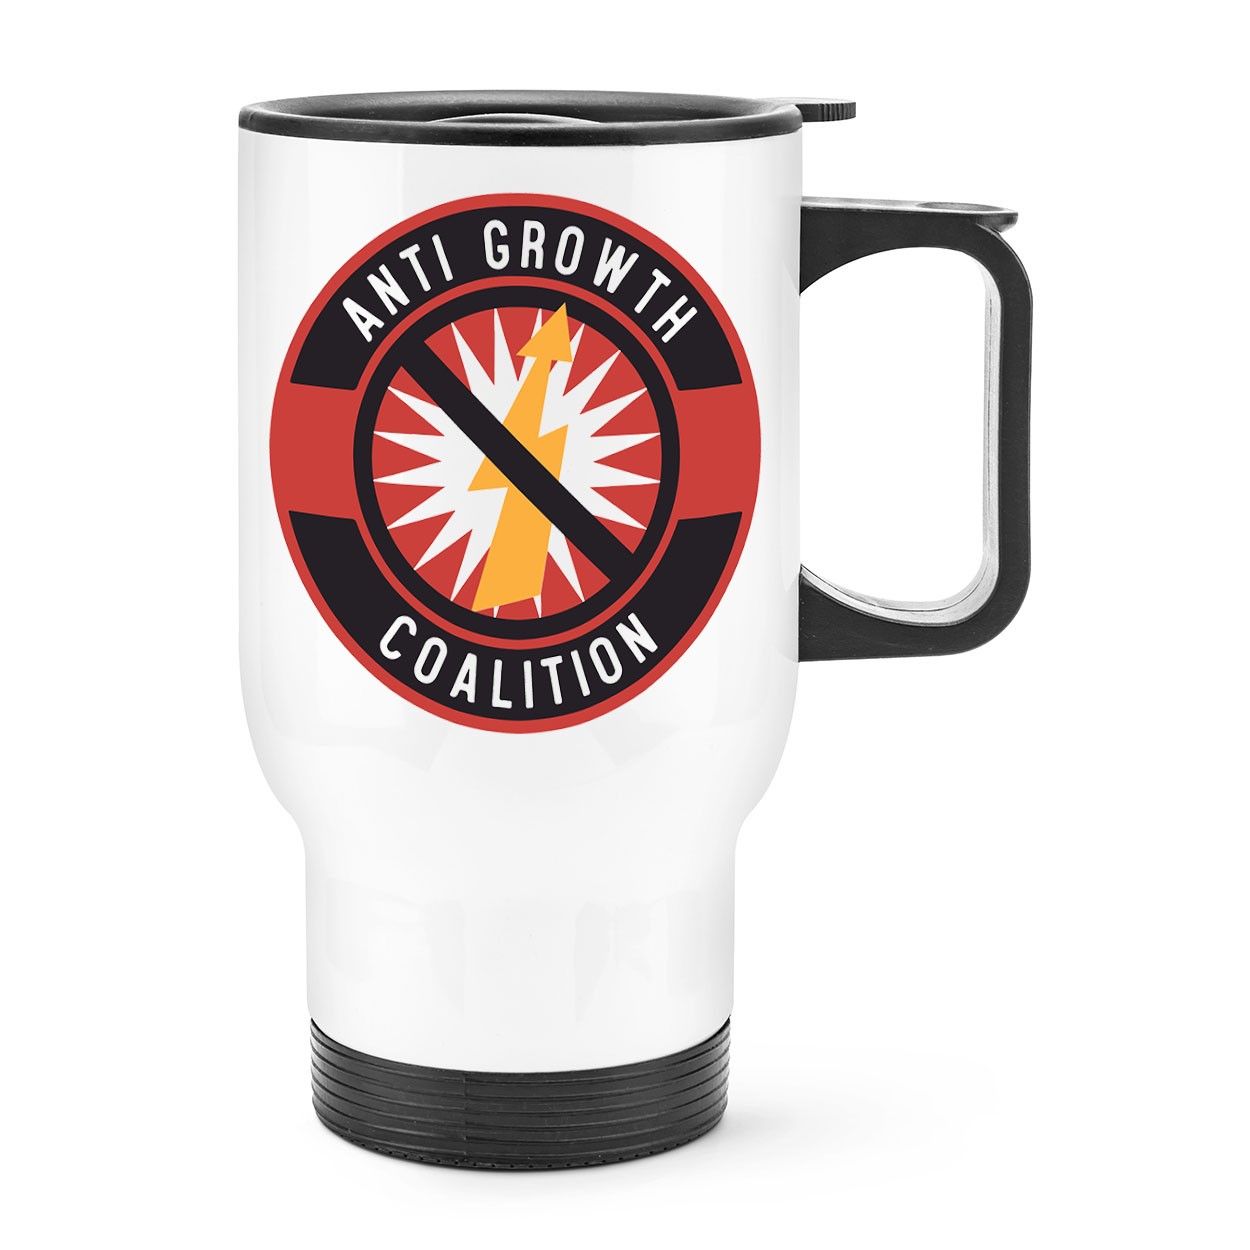 Anti Growth Coalition Travel Mug Cup With Handle